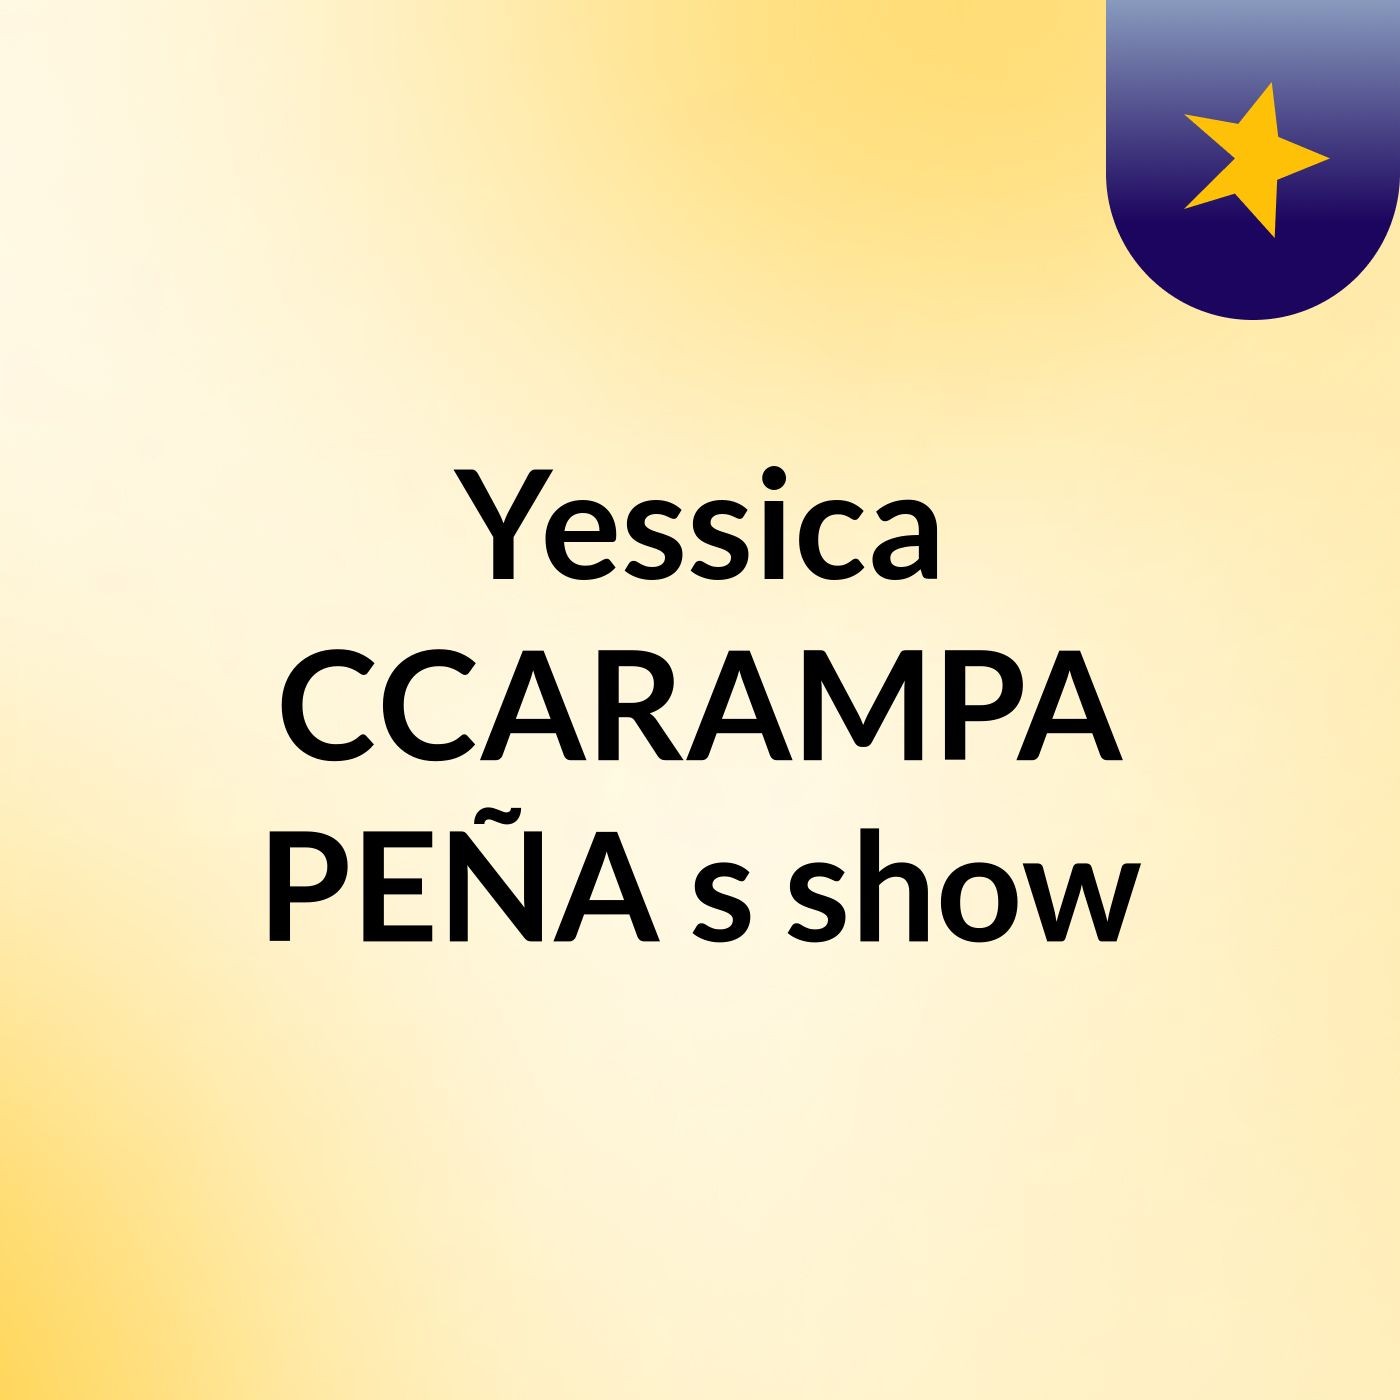 Yessica CCARAMPA PEÑA's show